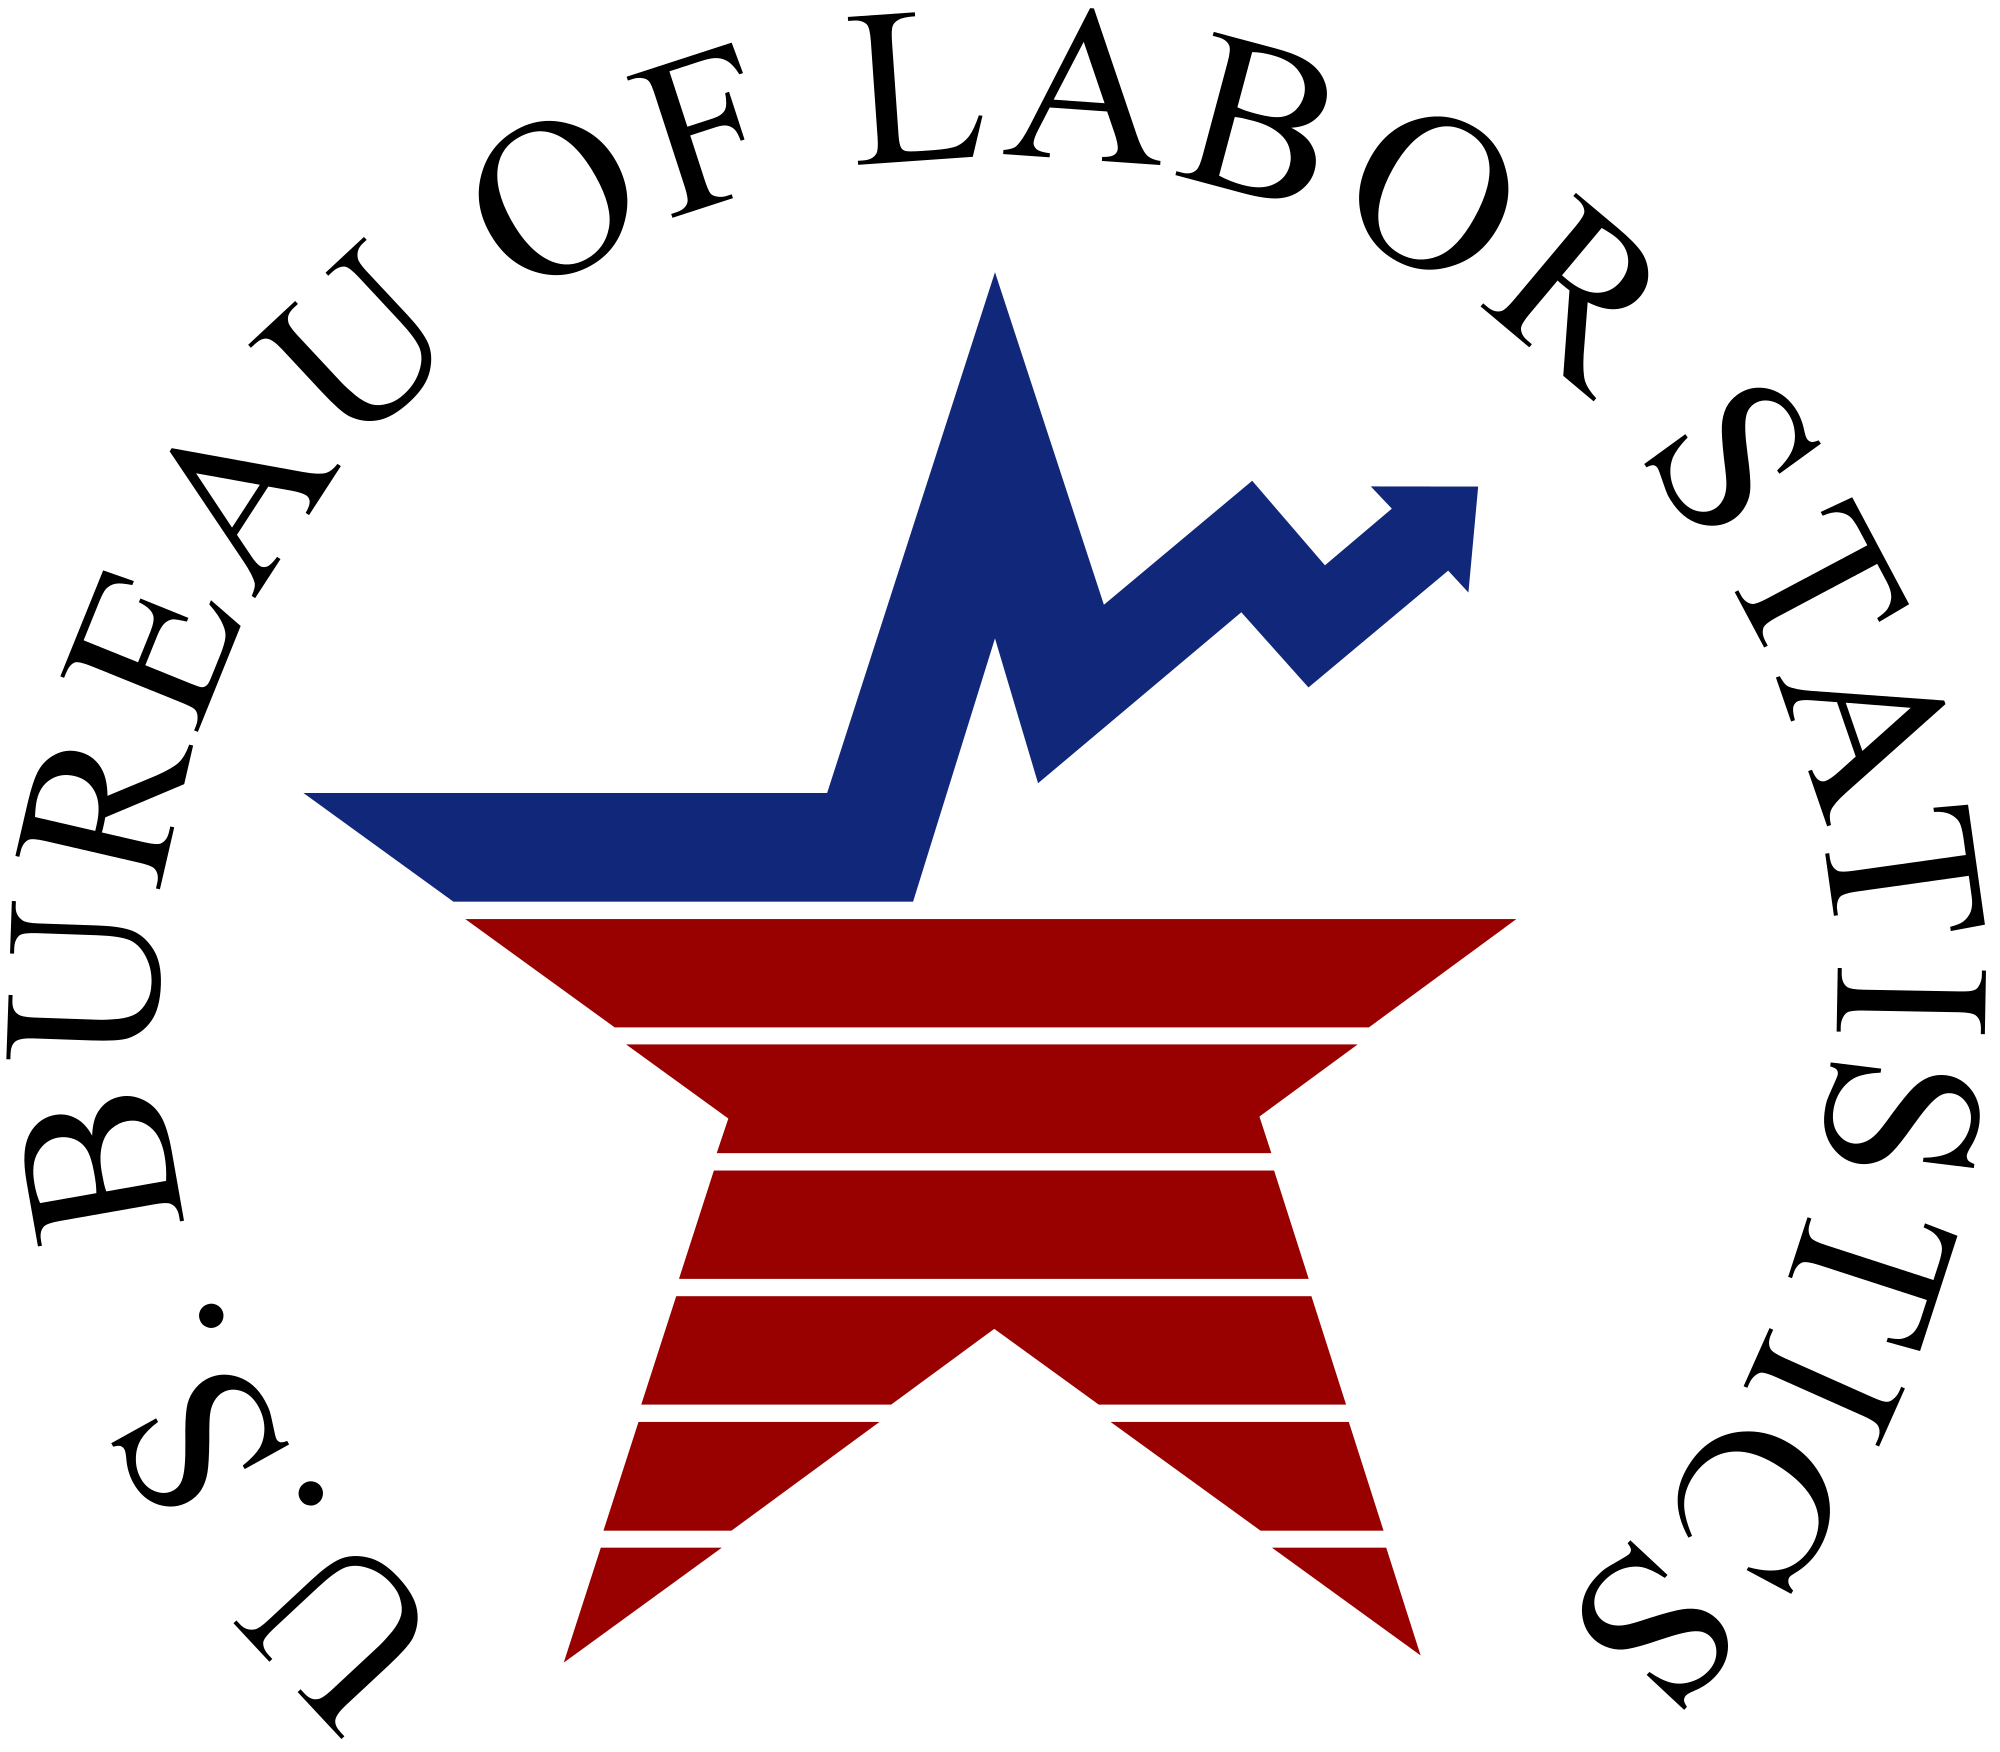 Official logo for the U.S. Bureau of Labor Statistics